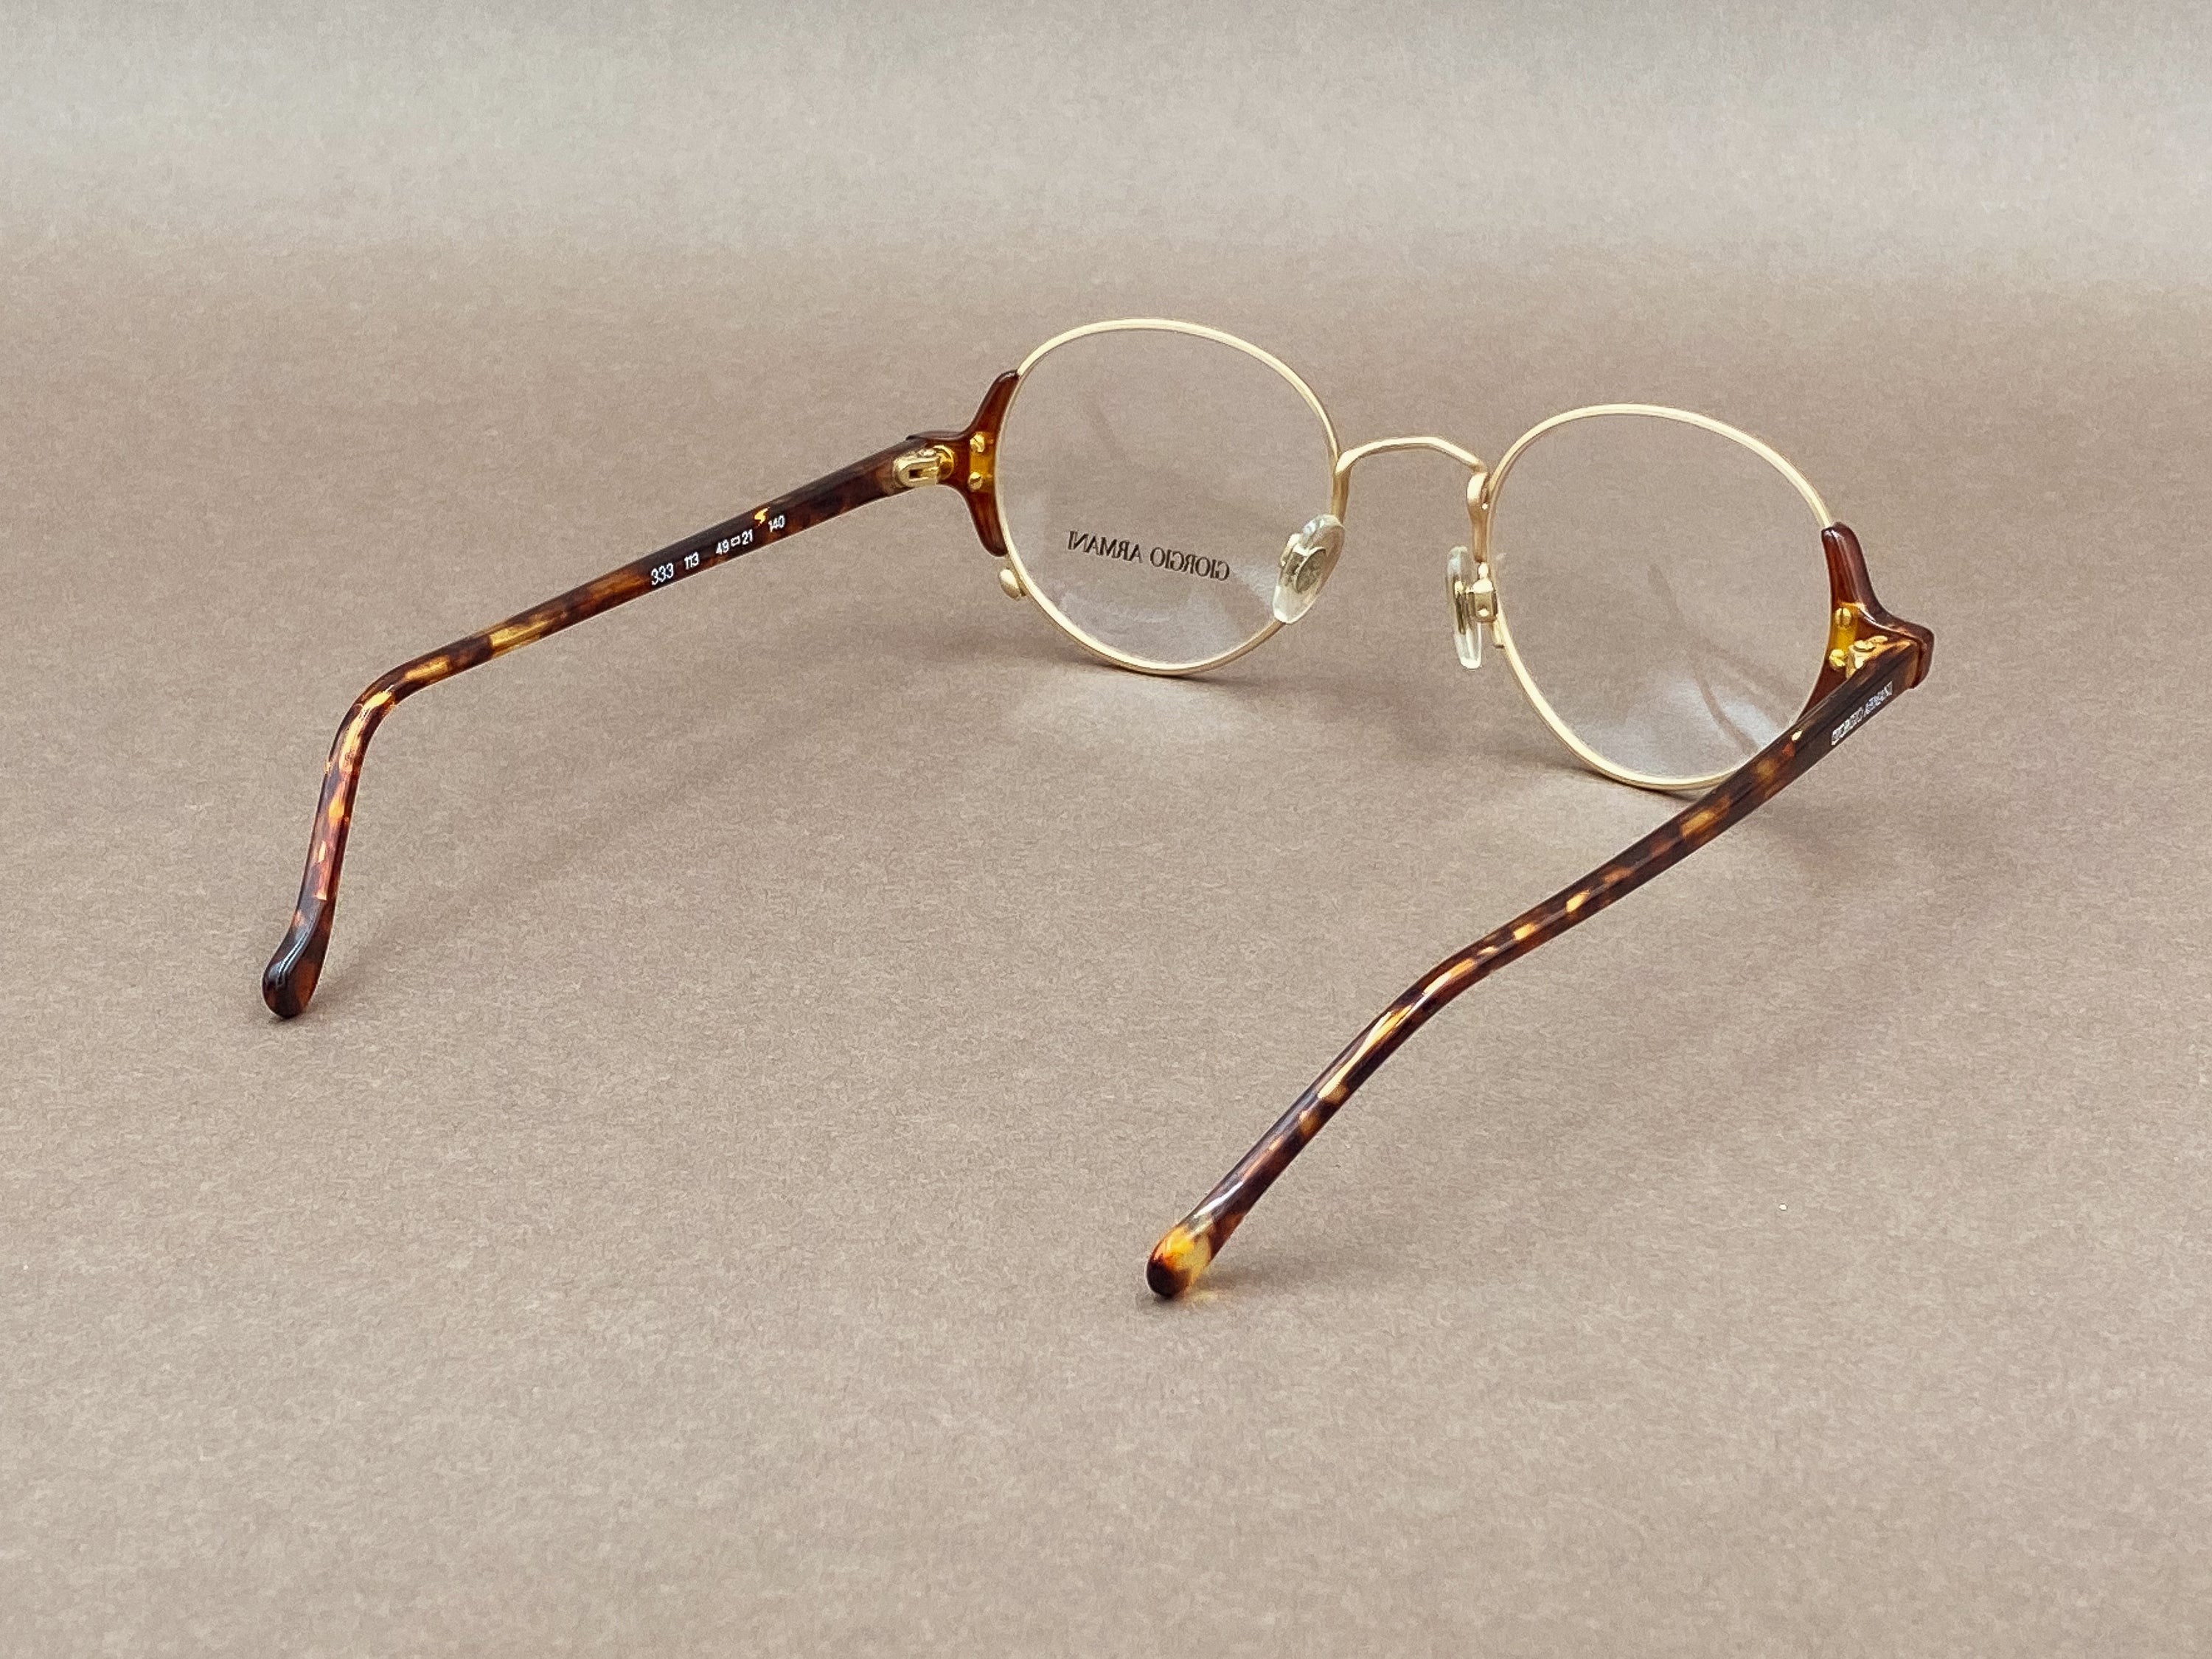 Giorgio Armani 333 eyeglasses